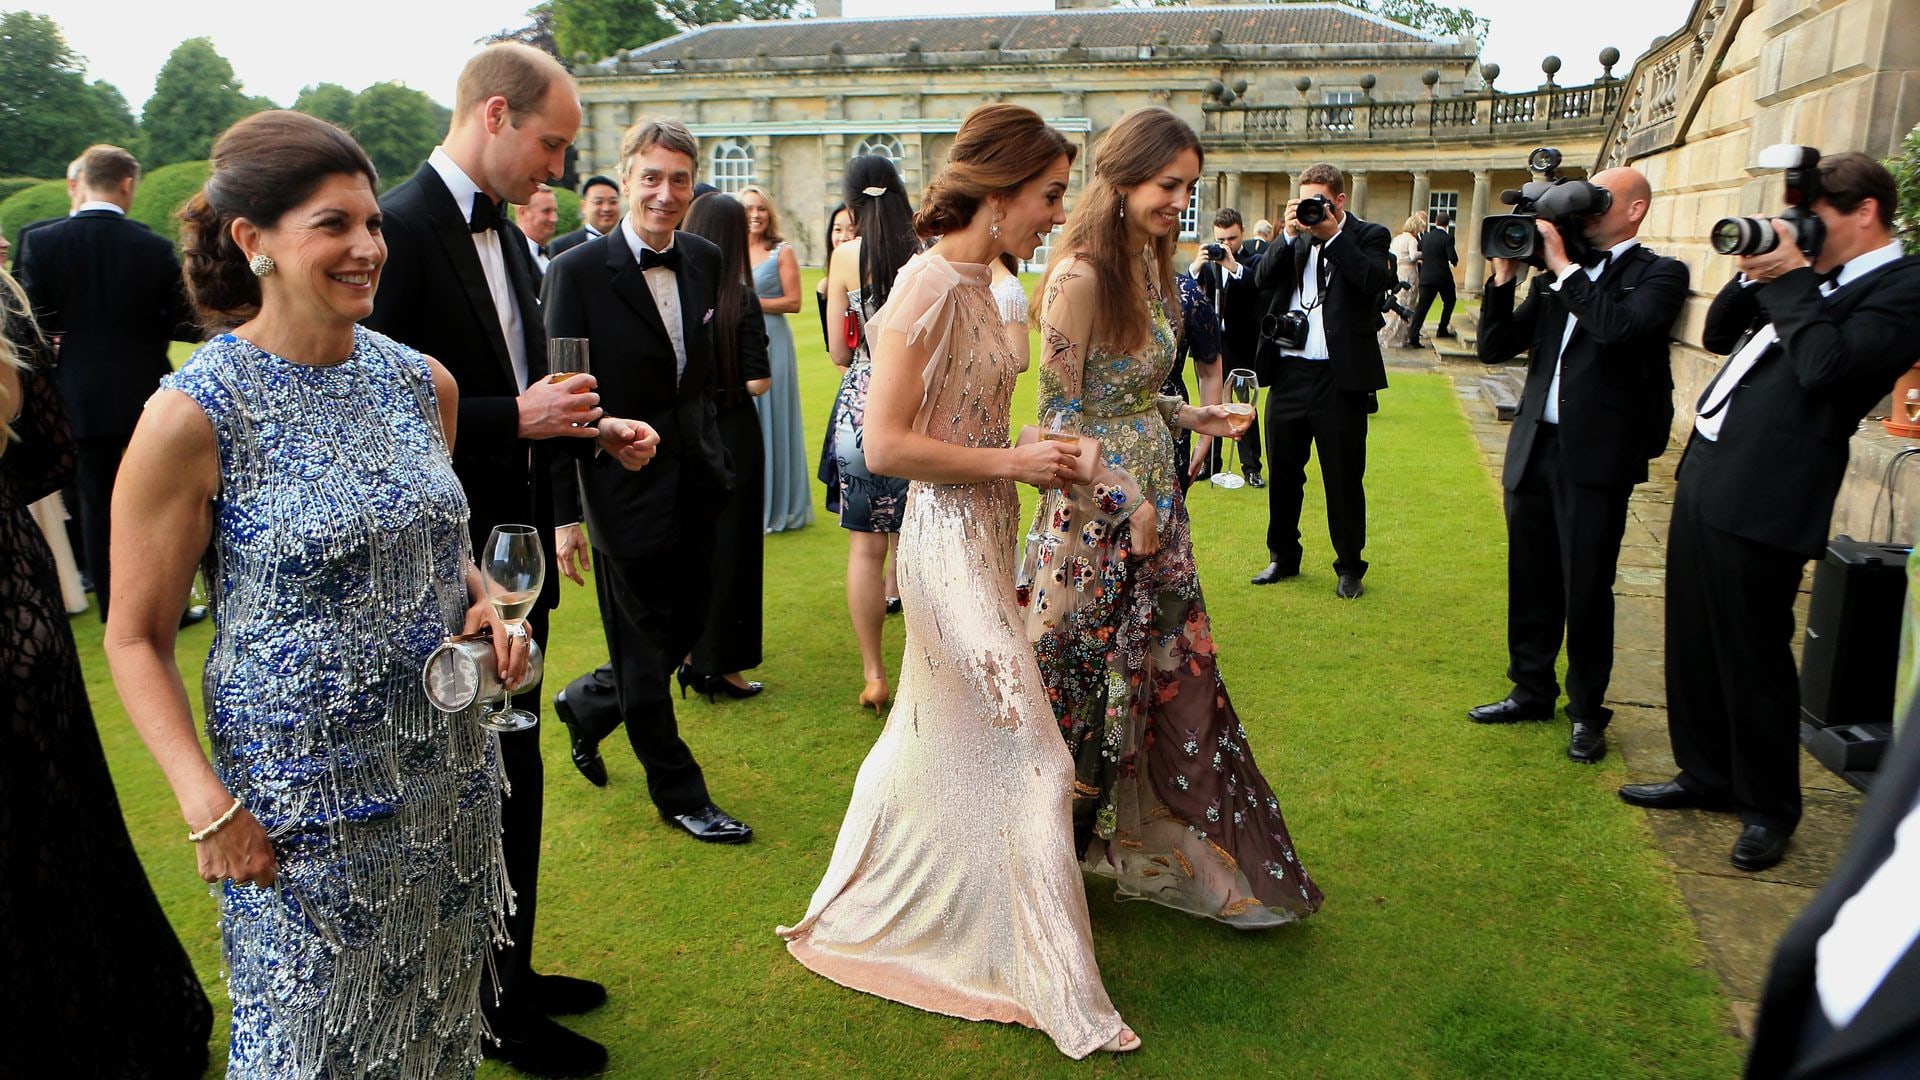 Kate Middleton walking with friend Rose Hanbury